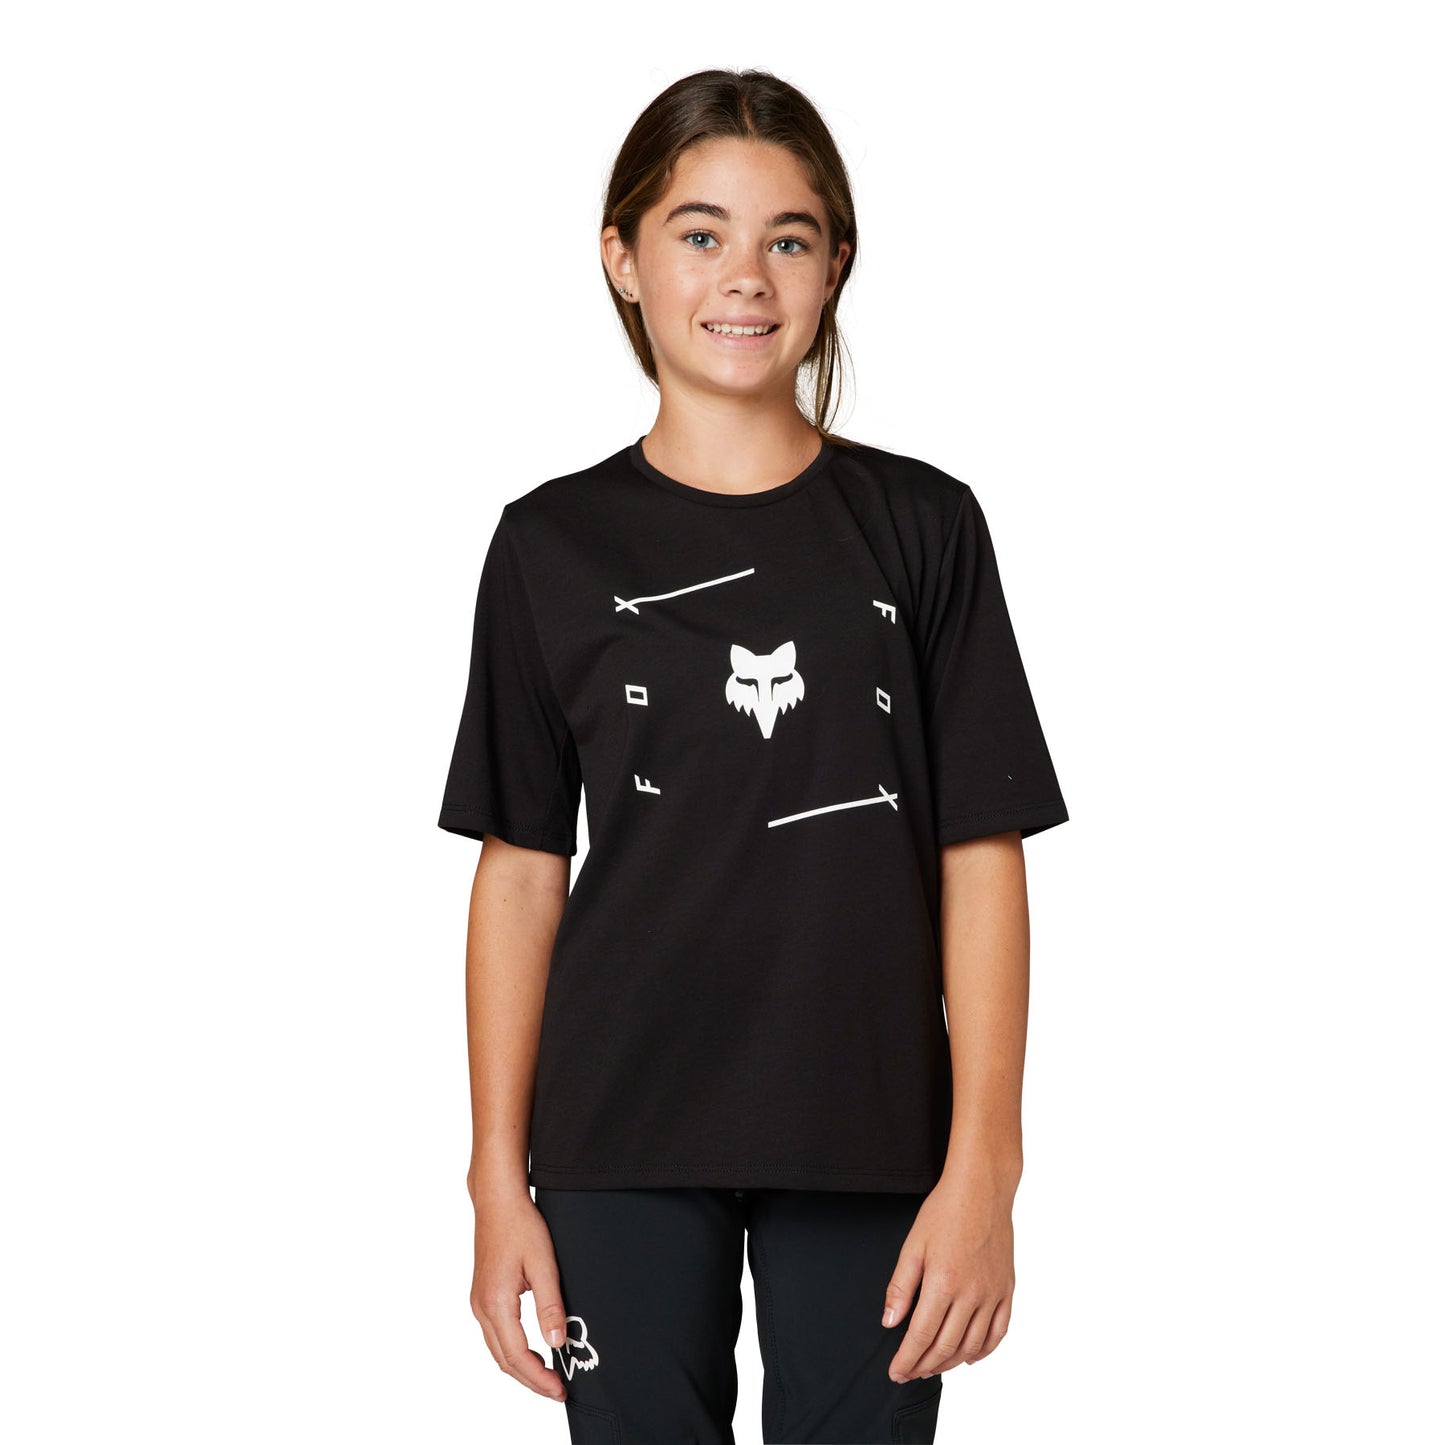 Fox Ranger DriRelease Veni Youth Short Sleeve Jersey - Youth L - Black